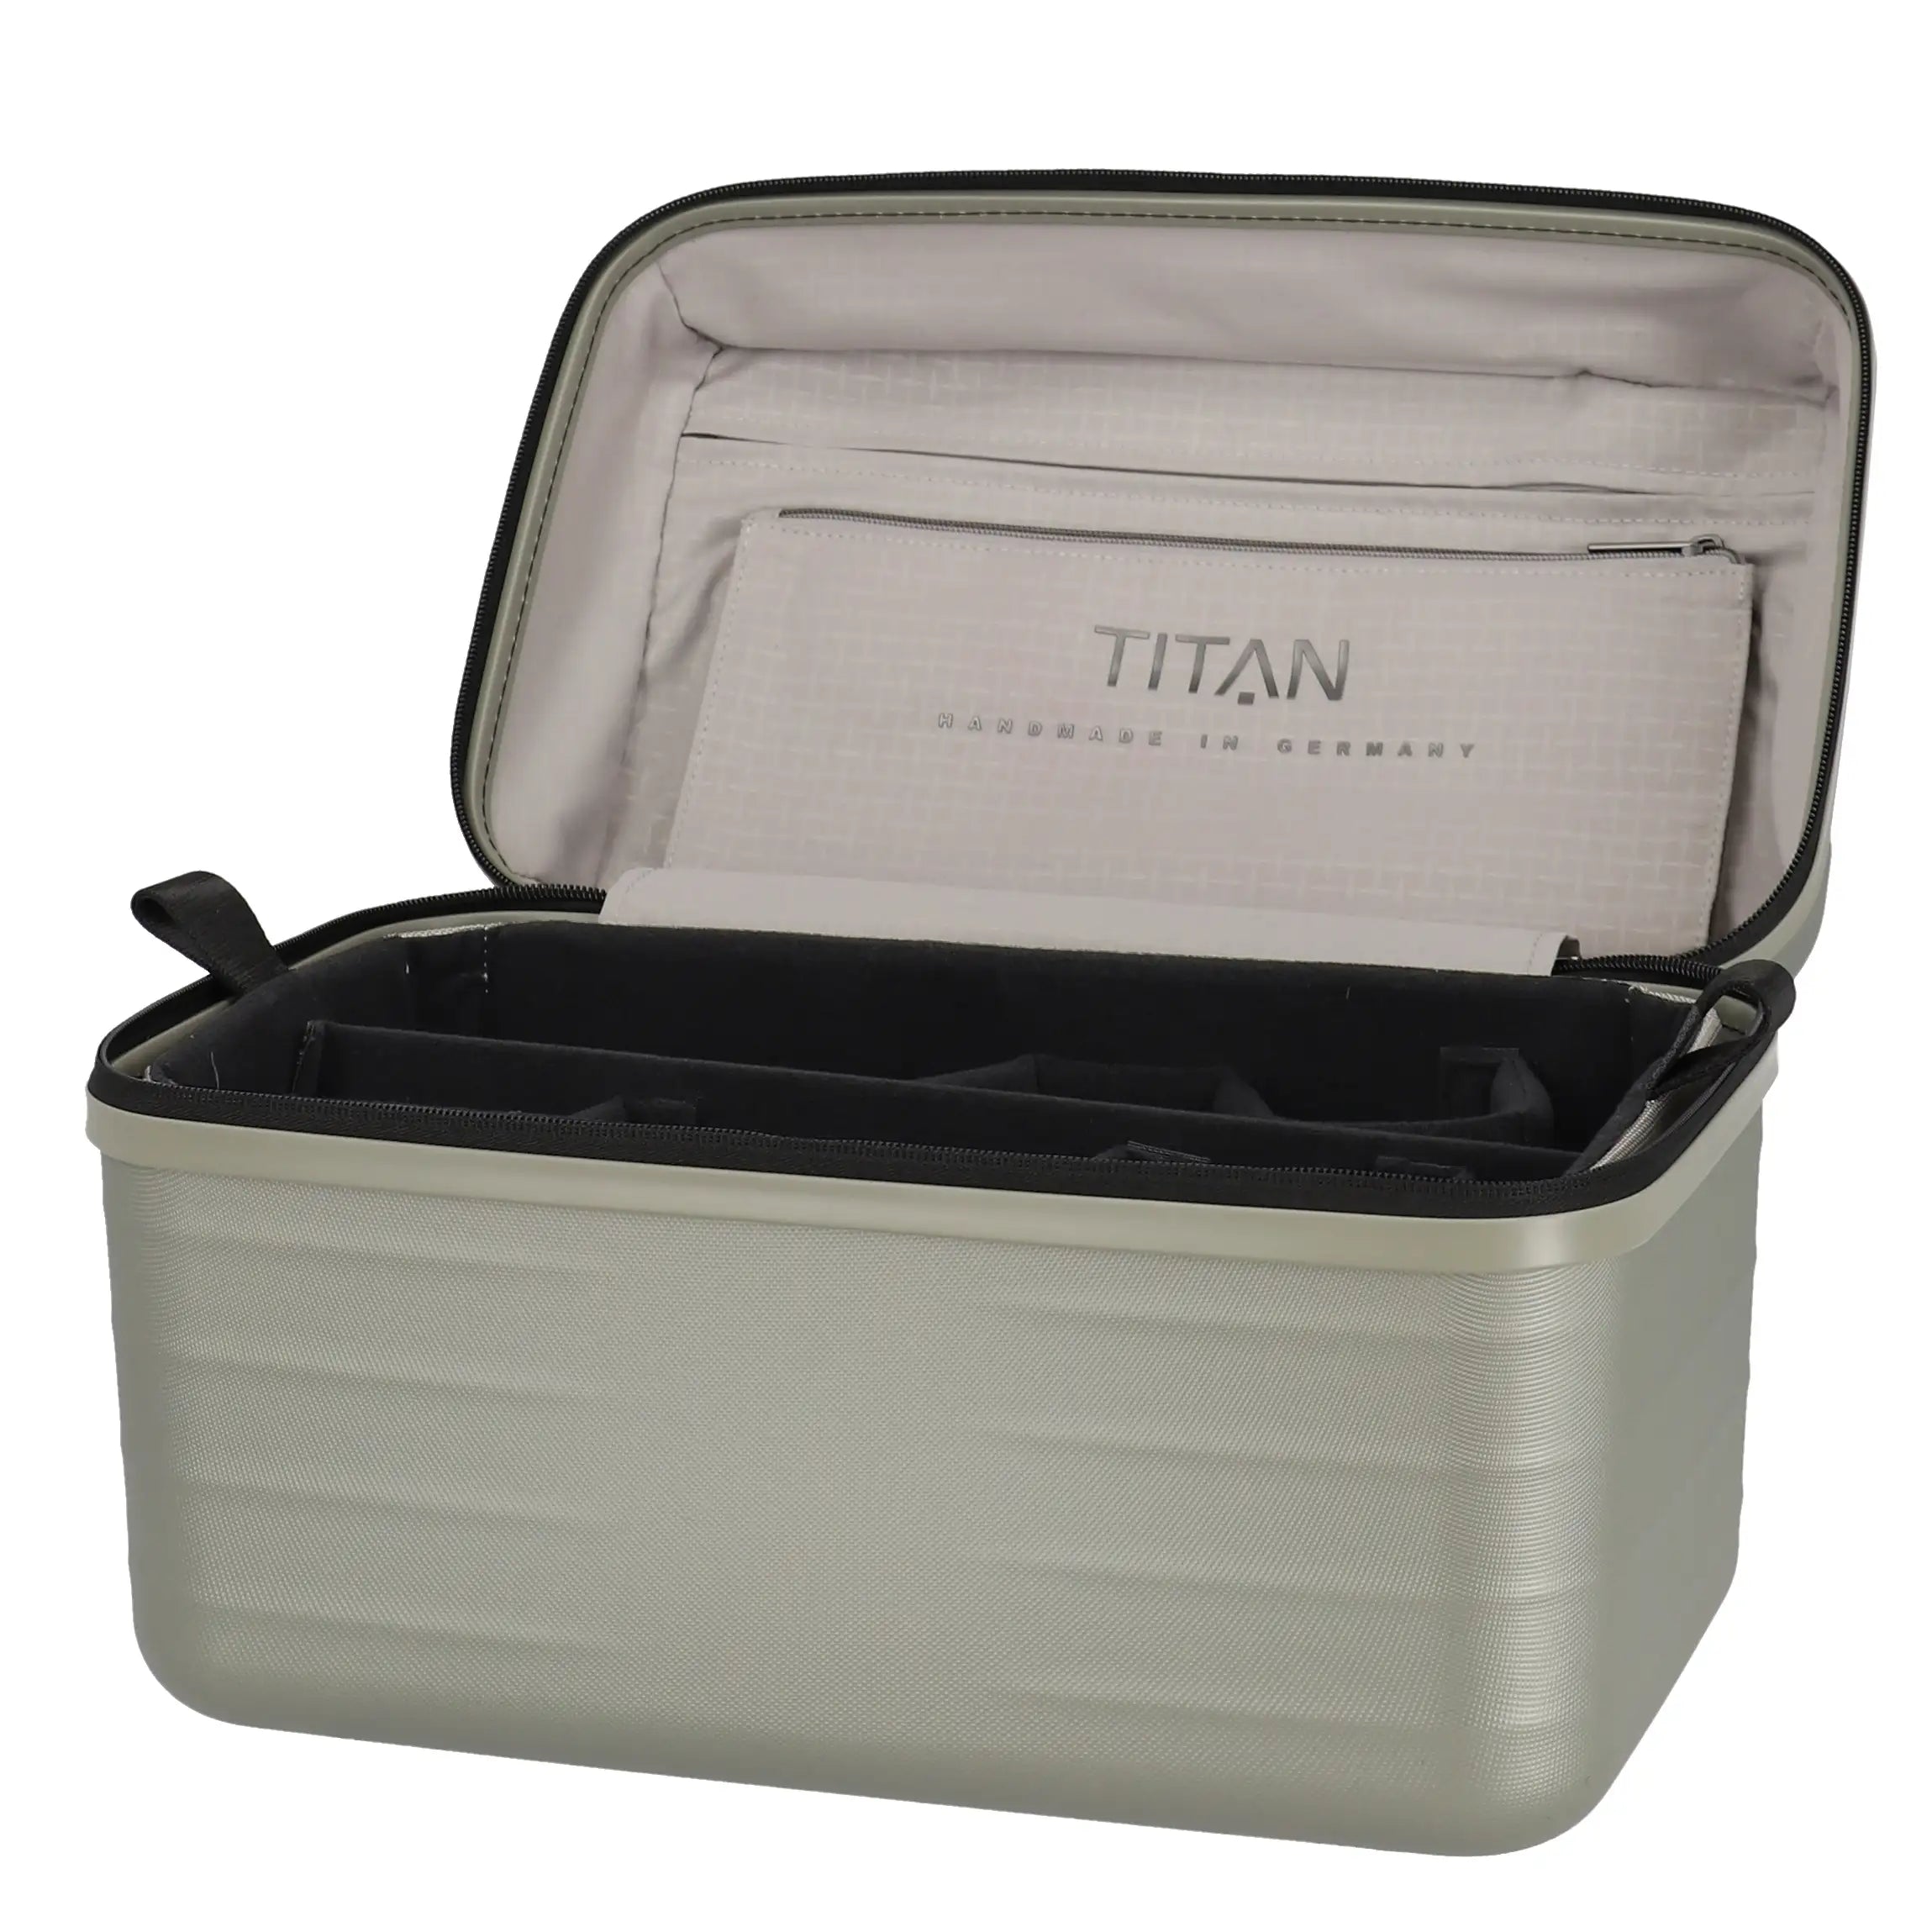 Titan Litron Beautycase - Champagner